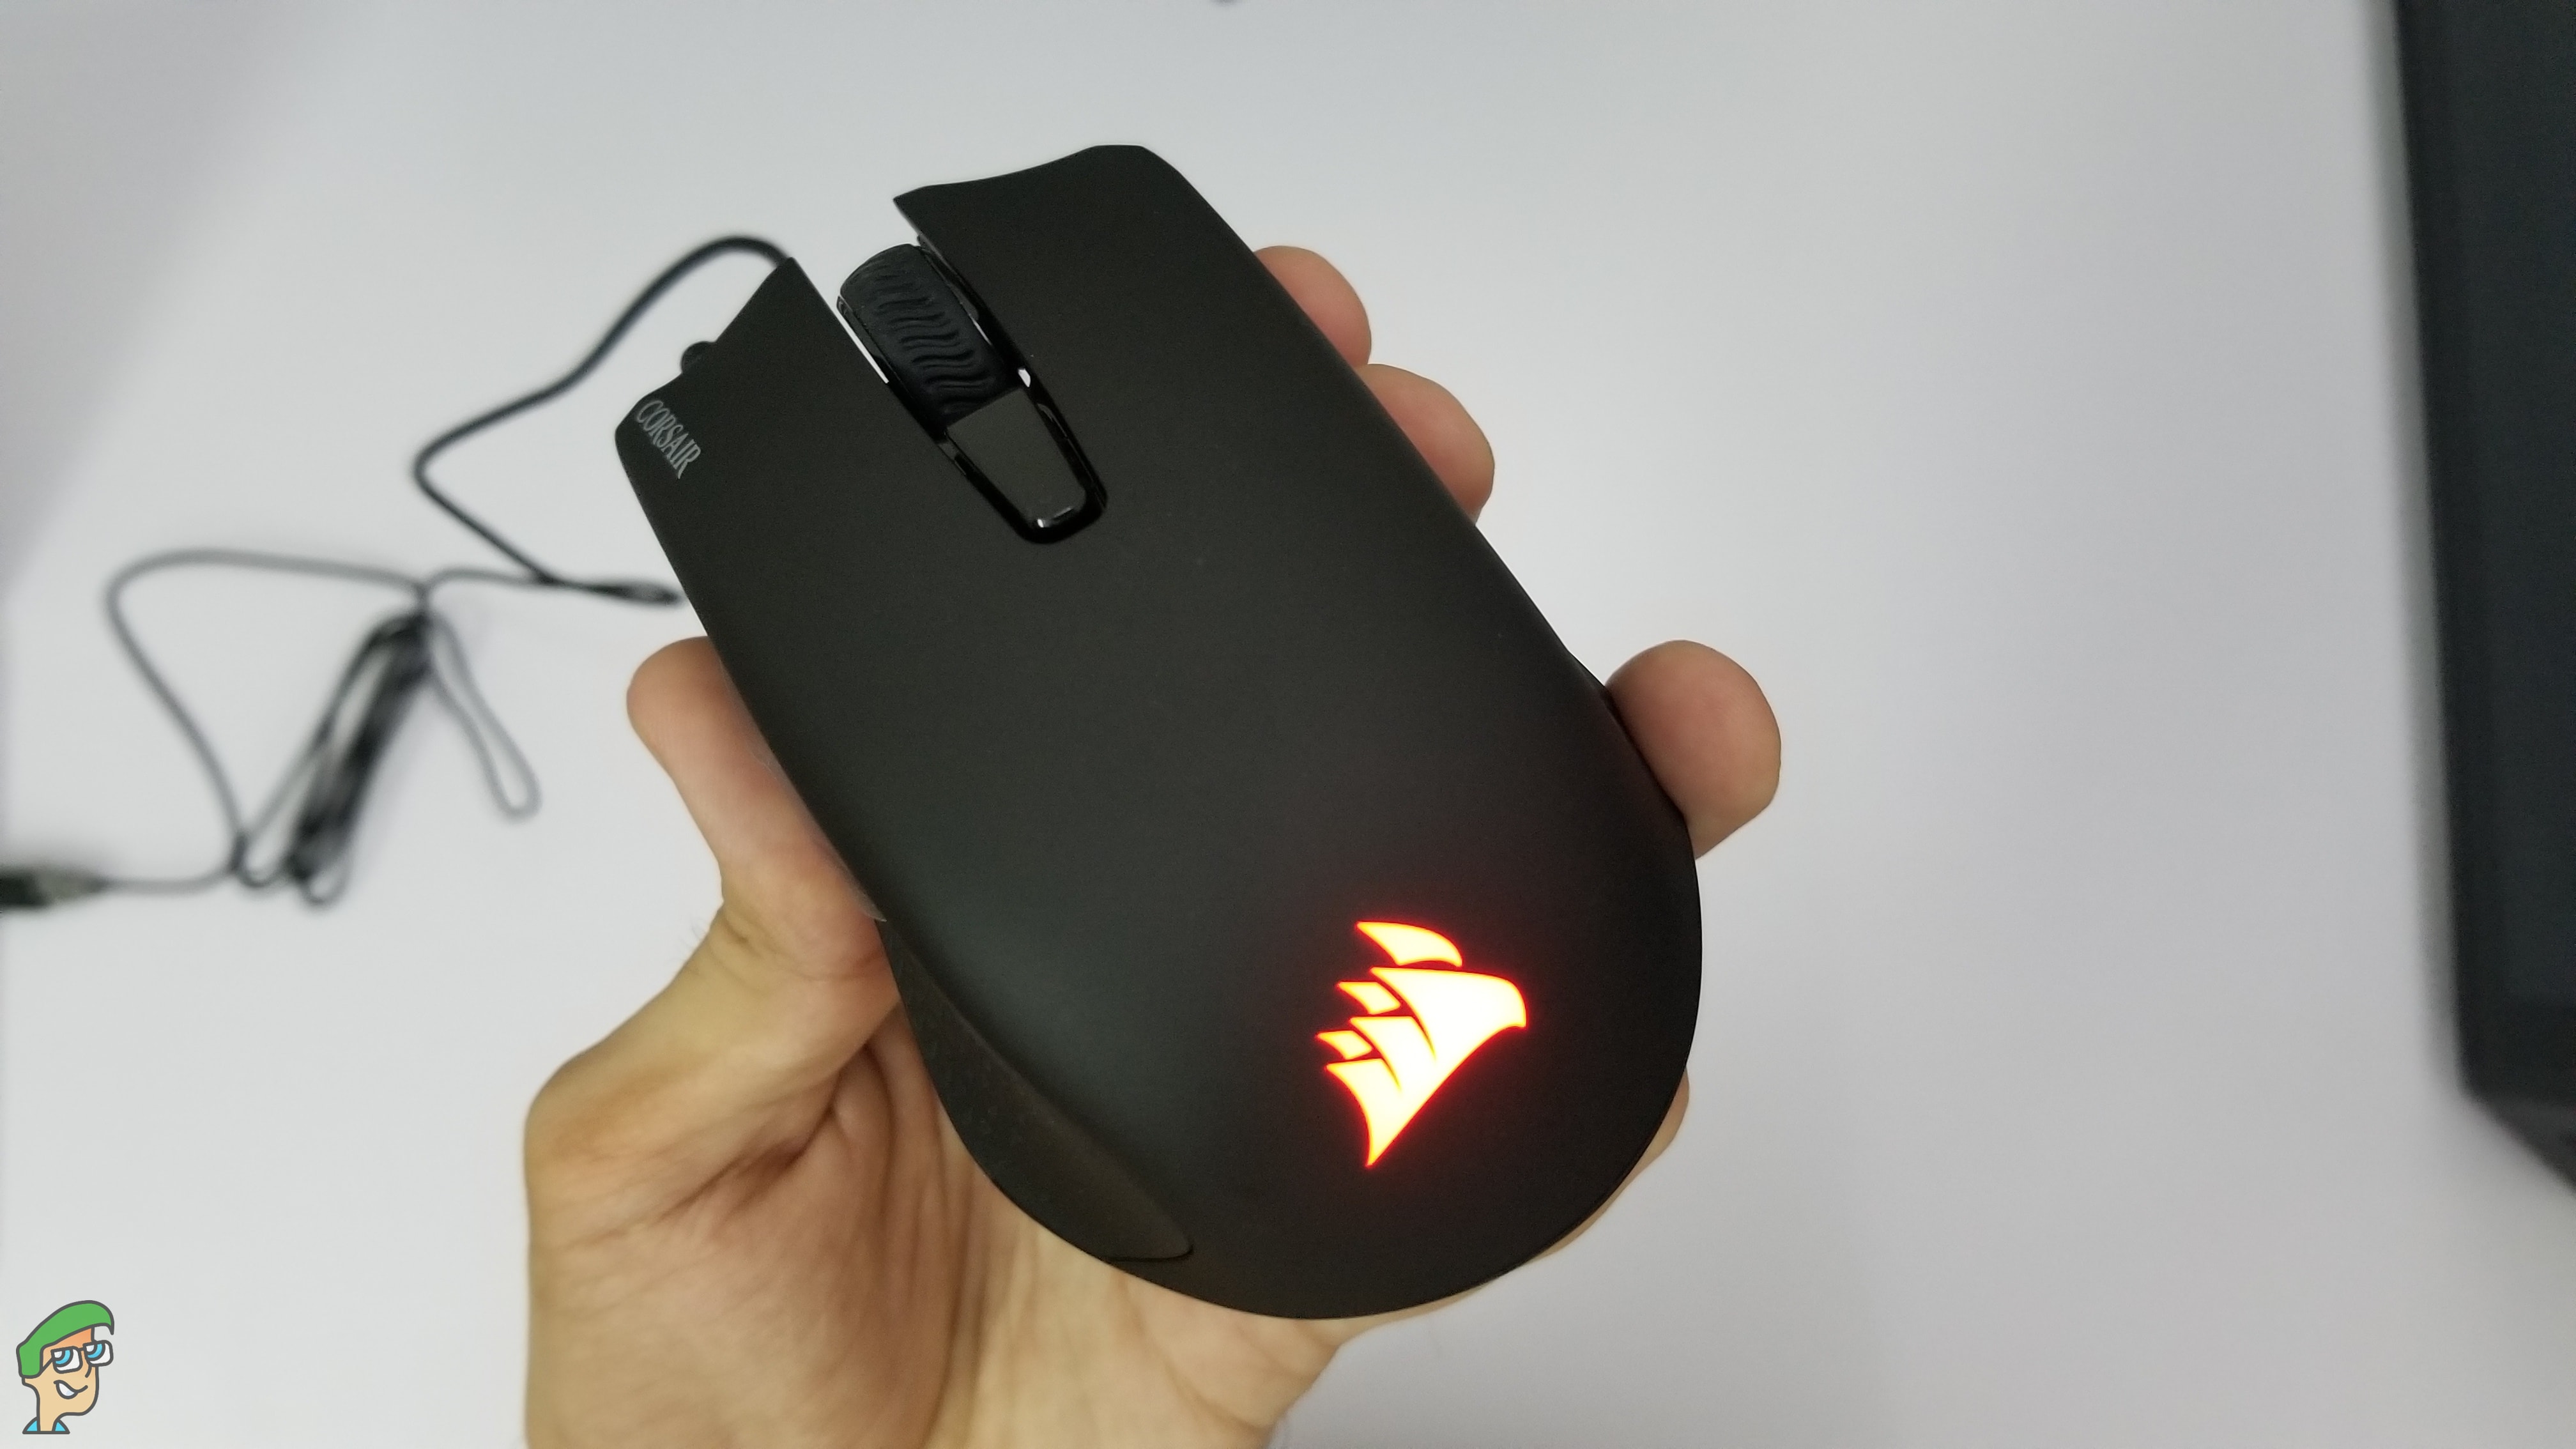 CORSAIR RGB Gaming Mouse Review - Appuals.com